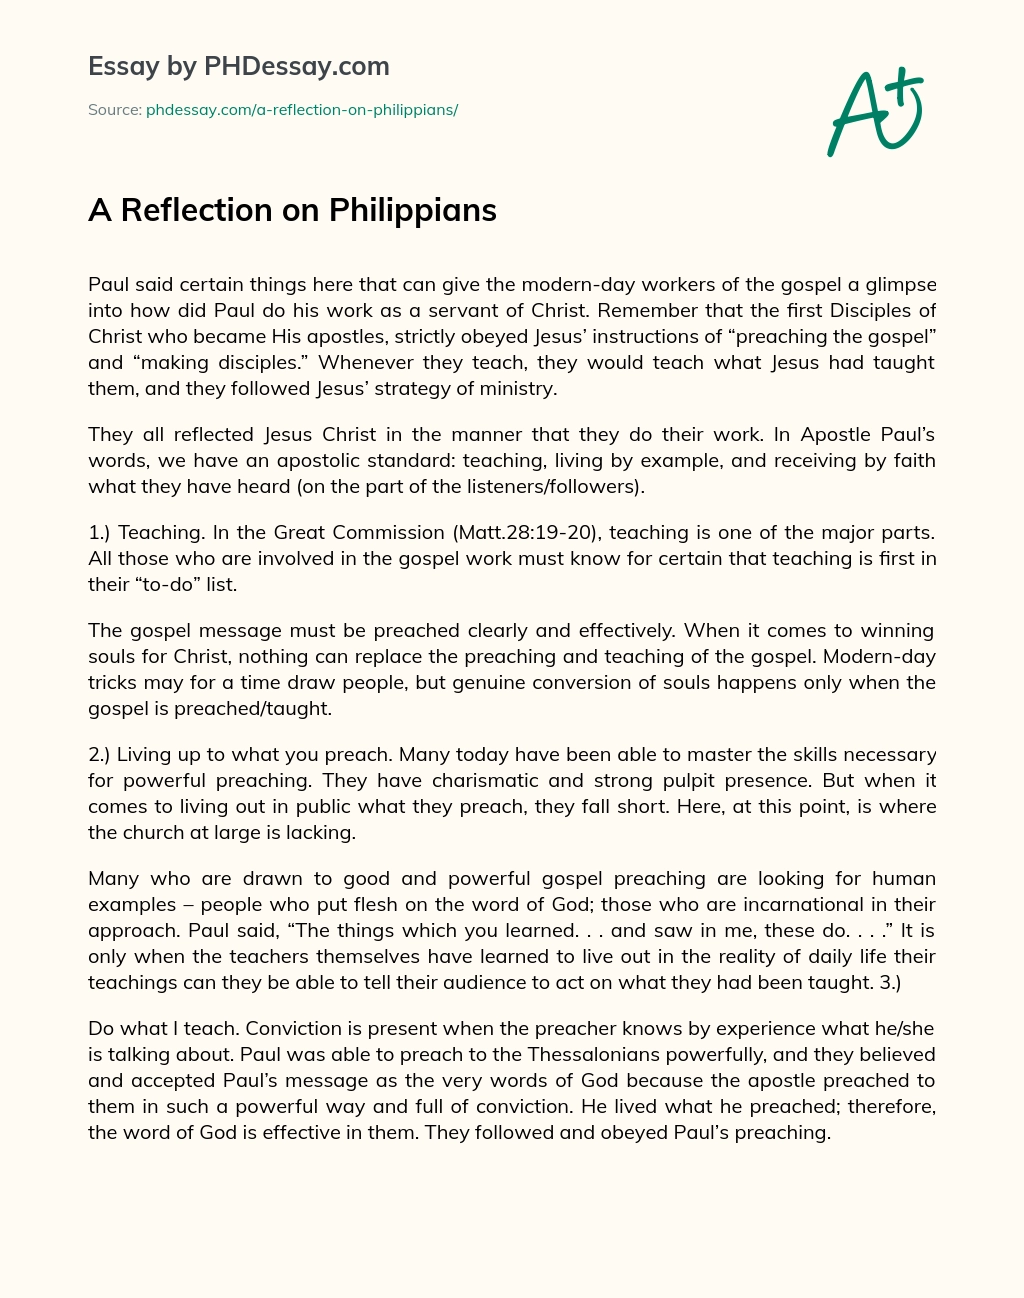 A Reflection on Philippians essay